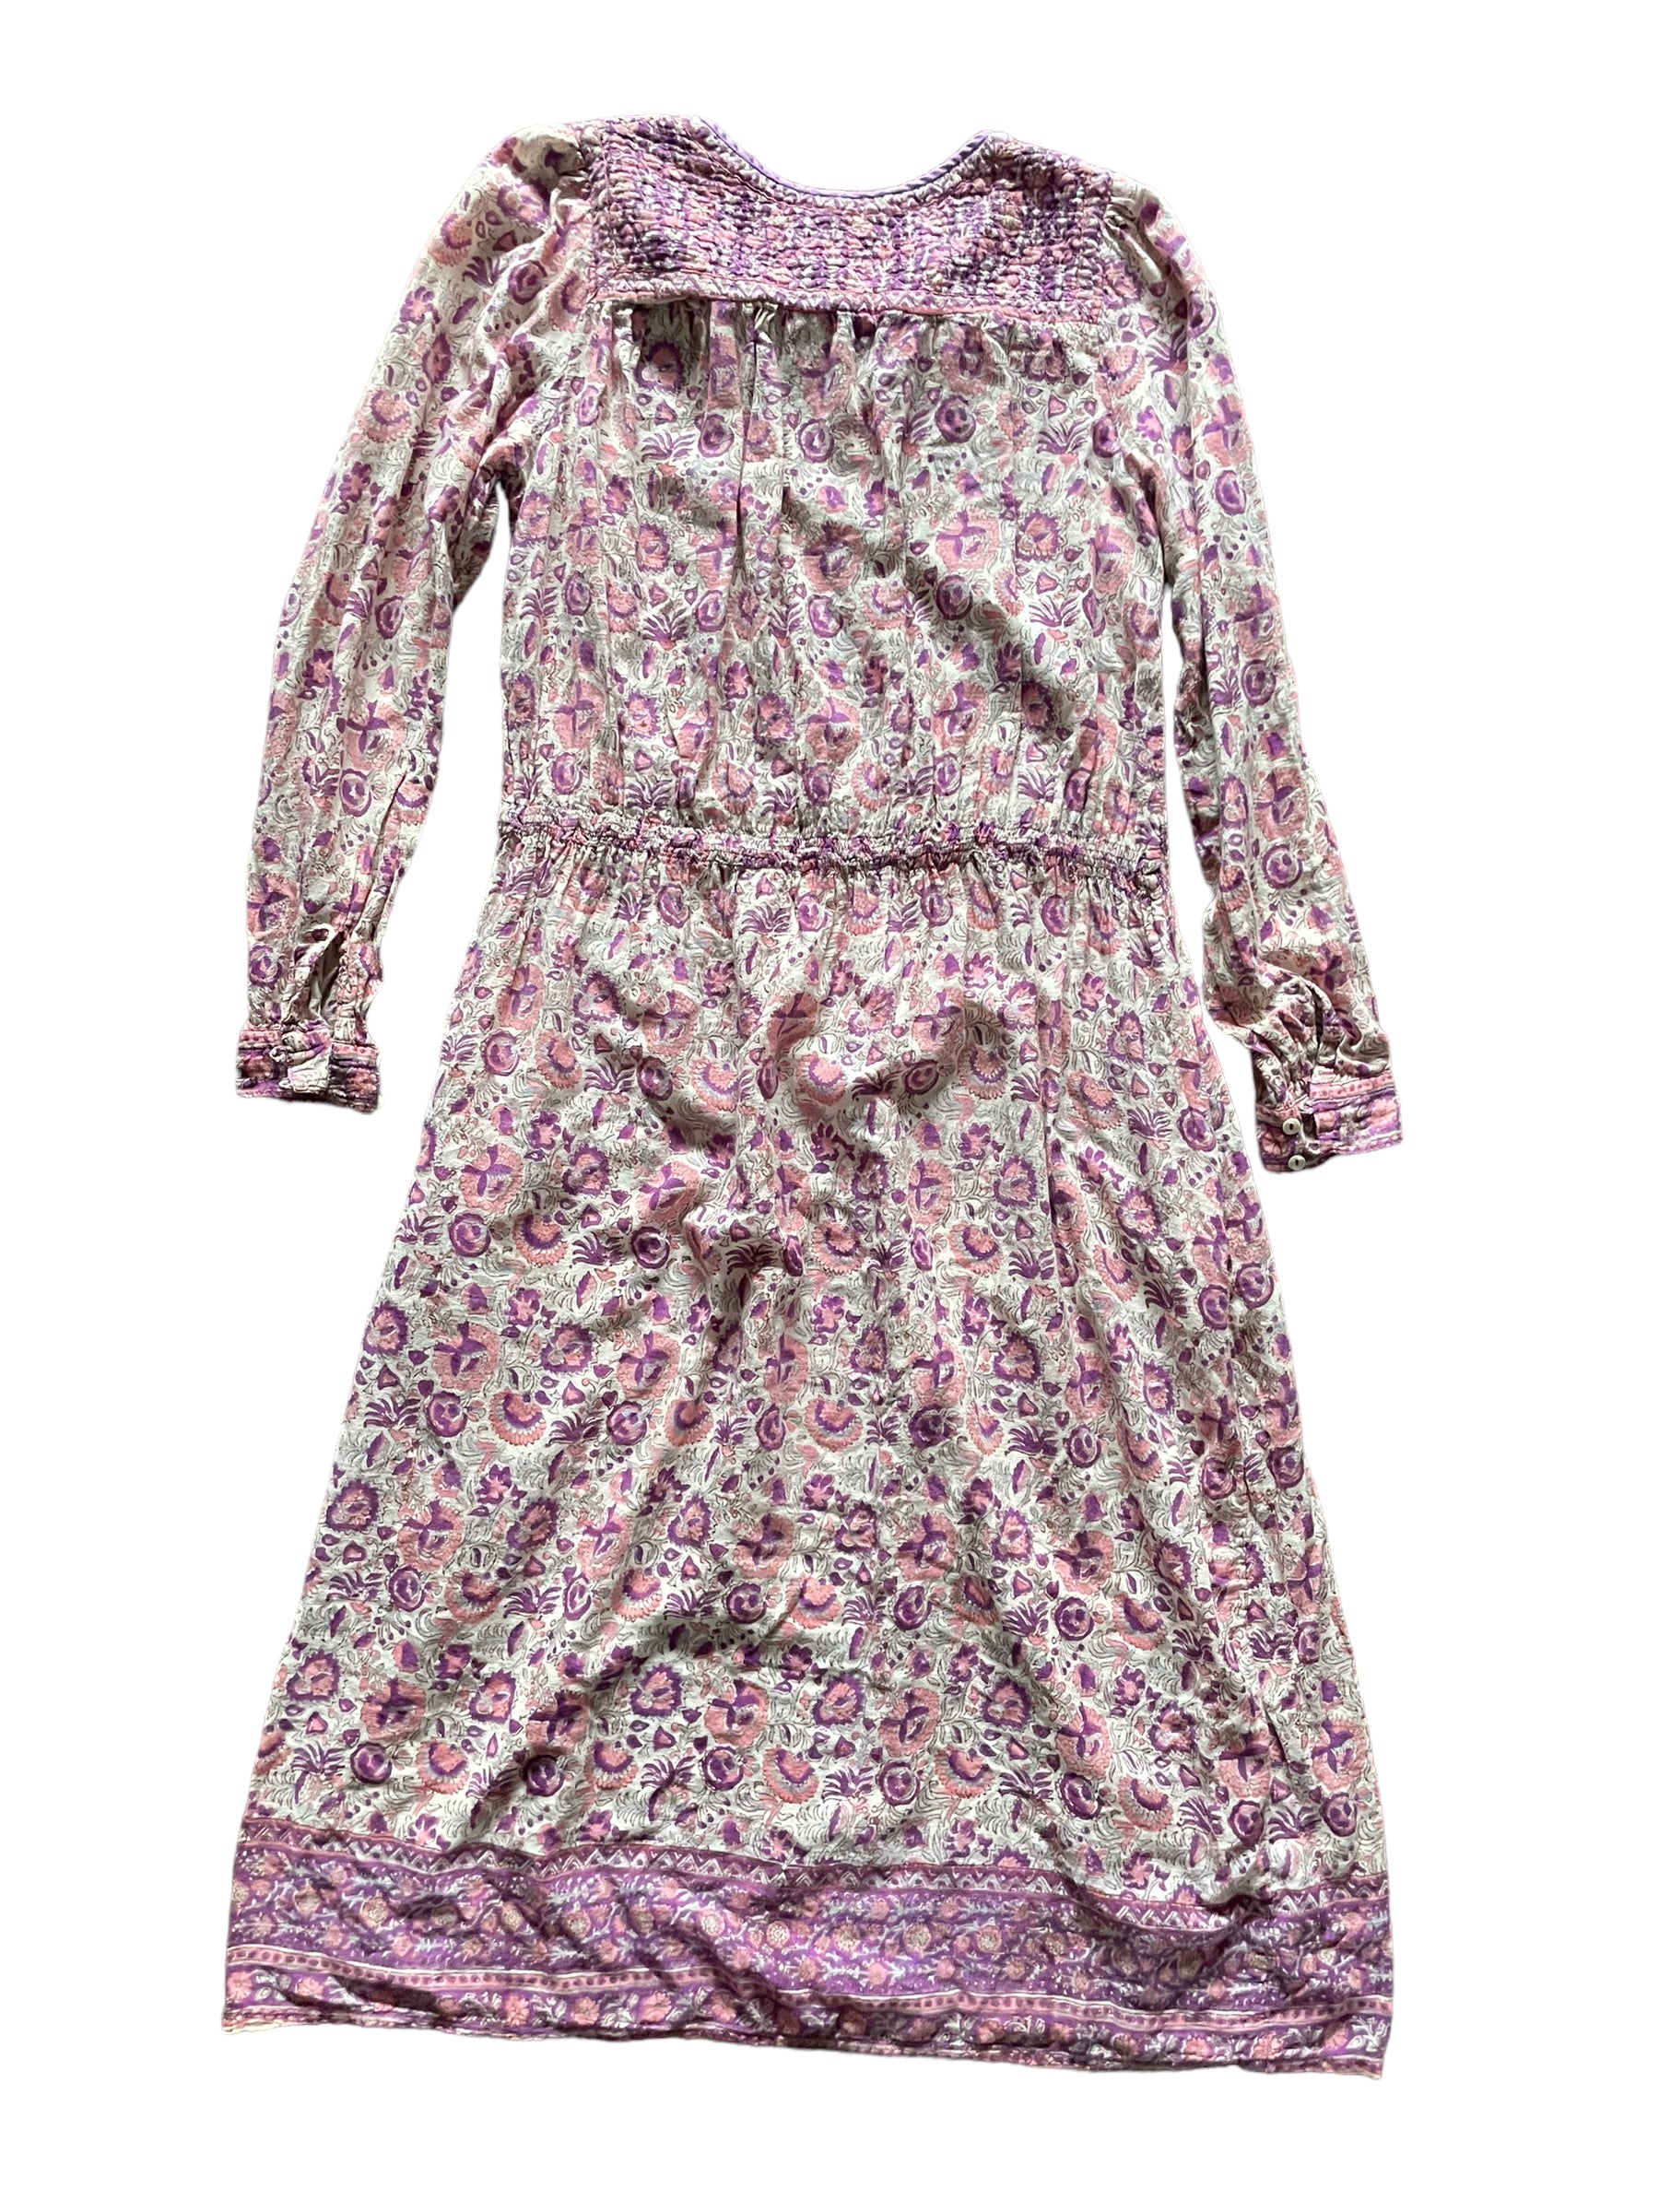 Full back view of Vintage 1970s Indian Cotton Dress SZ M-L |  Barn Owl Vintage Dresses | Seattle Vintage Ladies Clothing